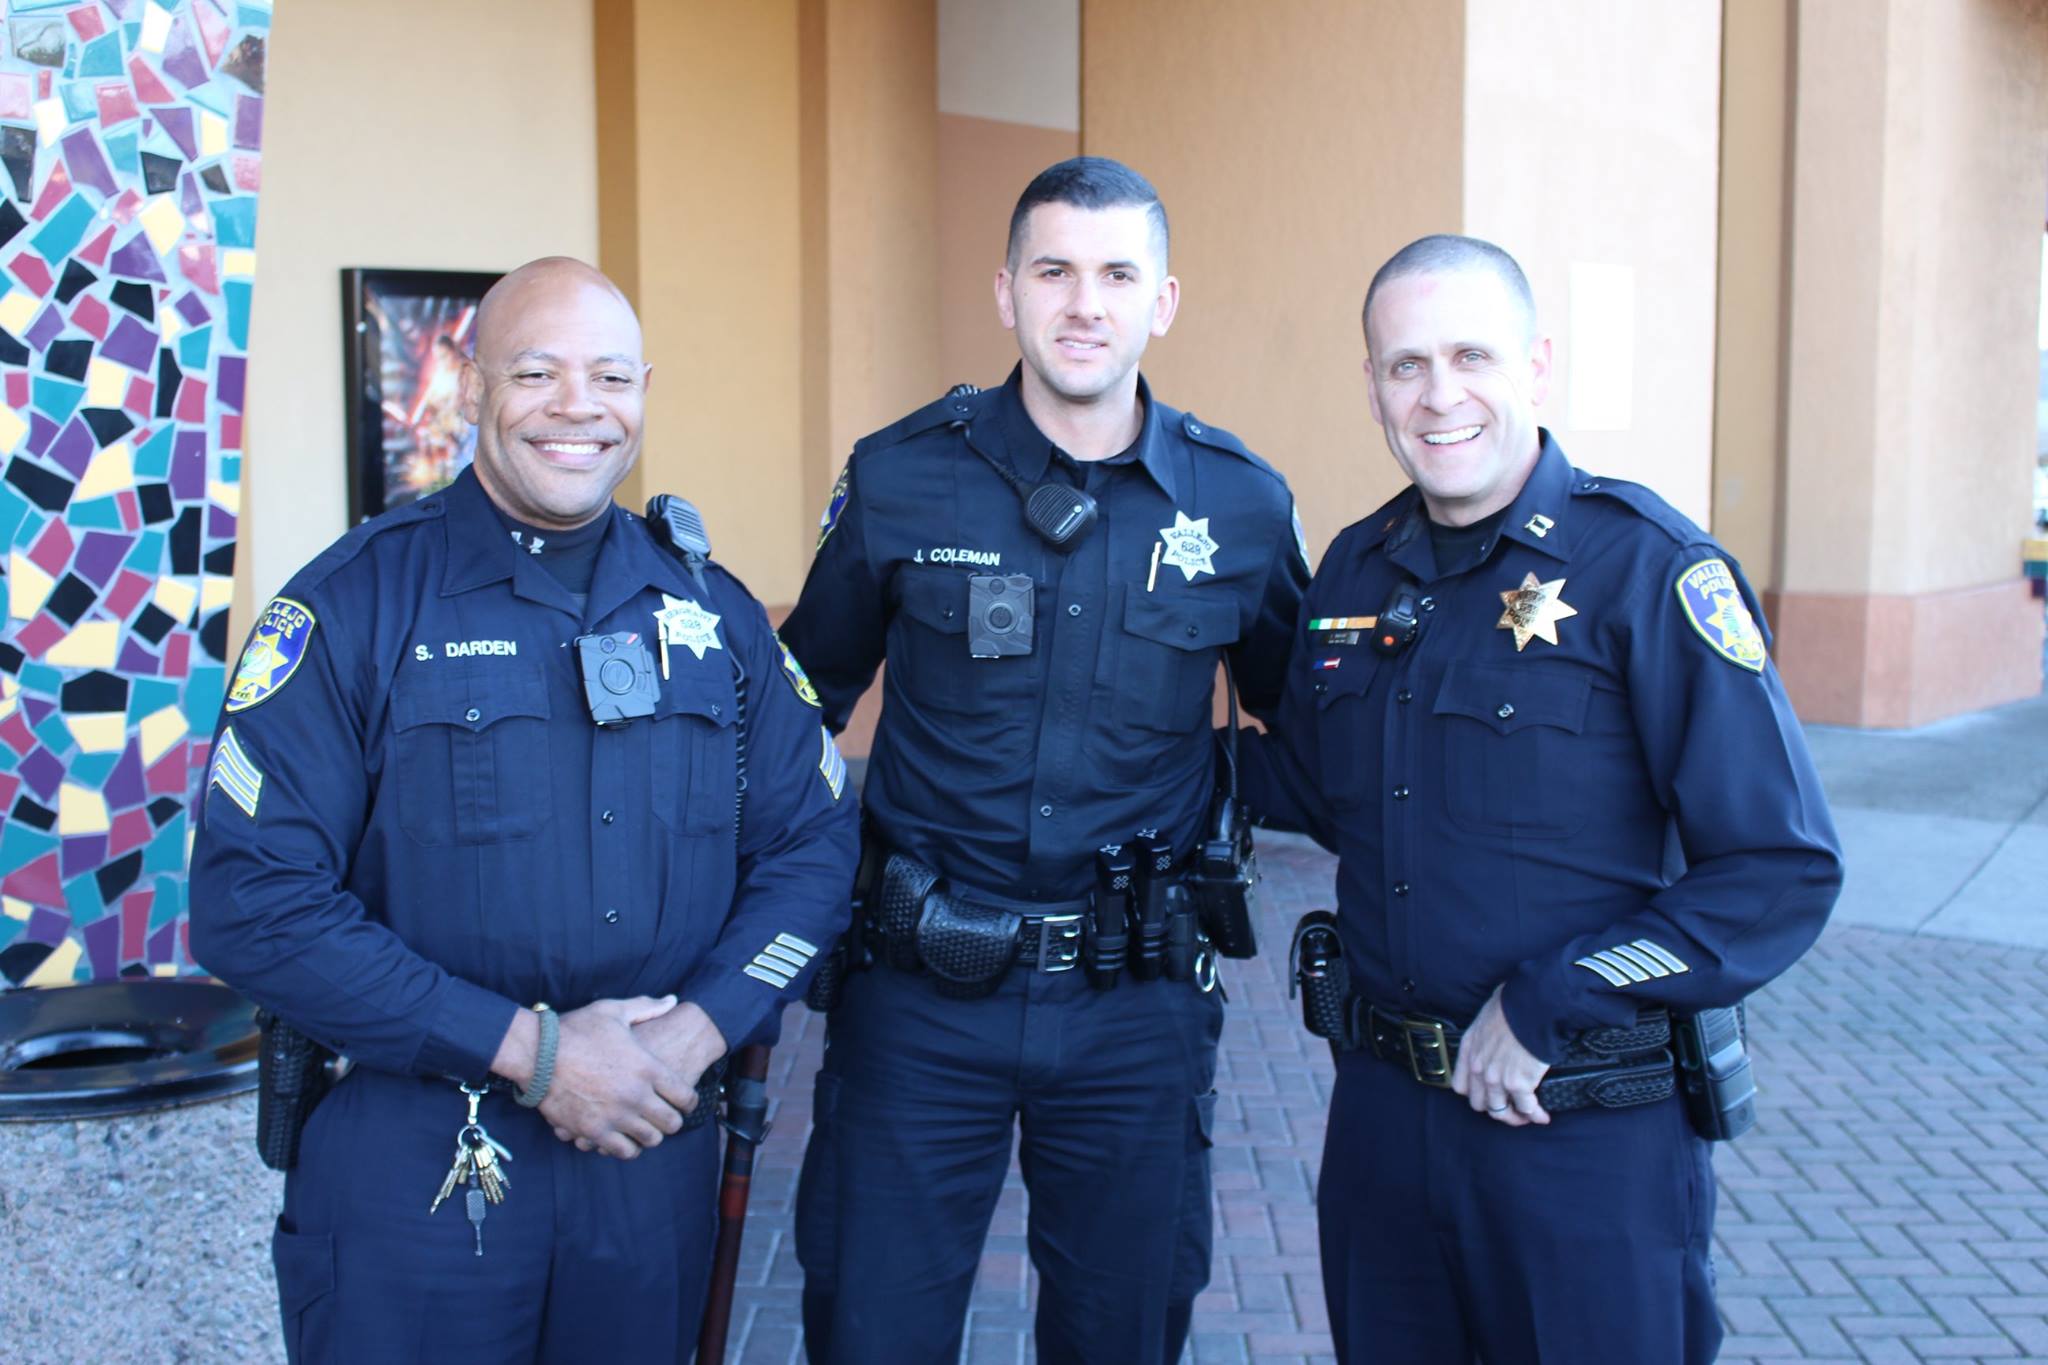 Then-Vallejo police Sgt. Steve Darden, Officer Josh Coleman, and Capt. Lee Horton 